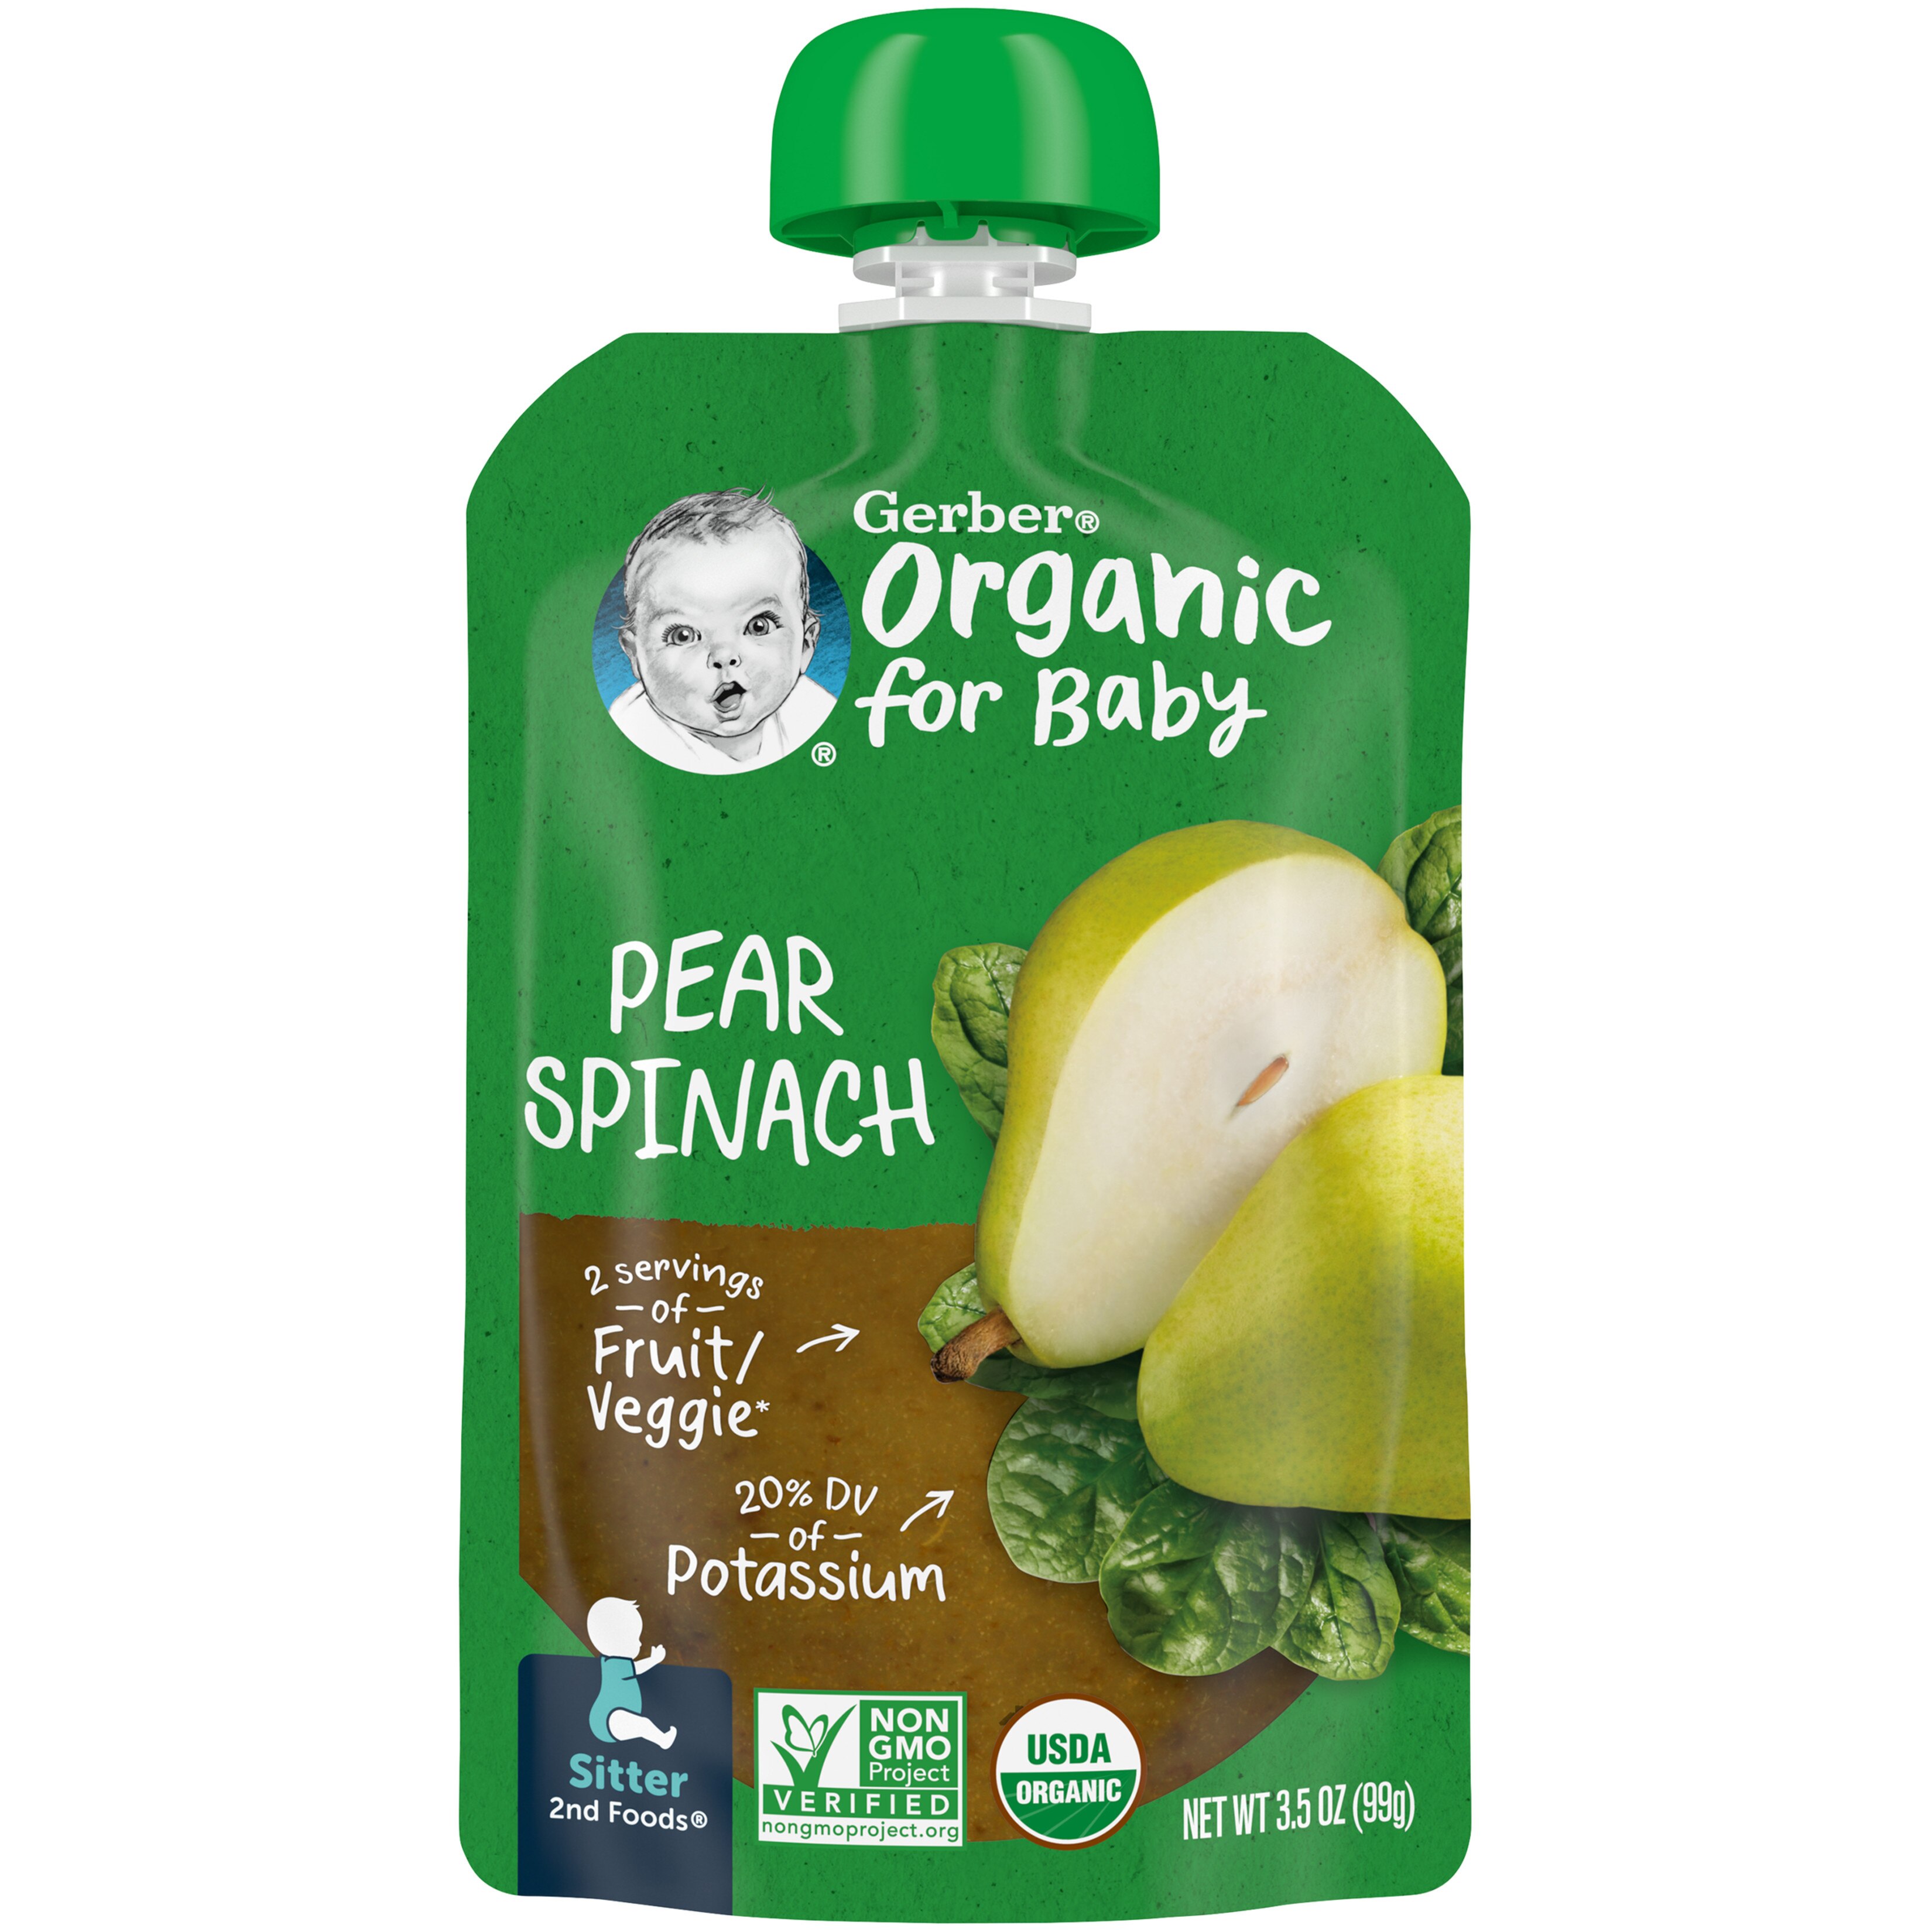 Gerber Organic Fruit & Veggies Pear Spinach Baby Food